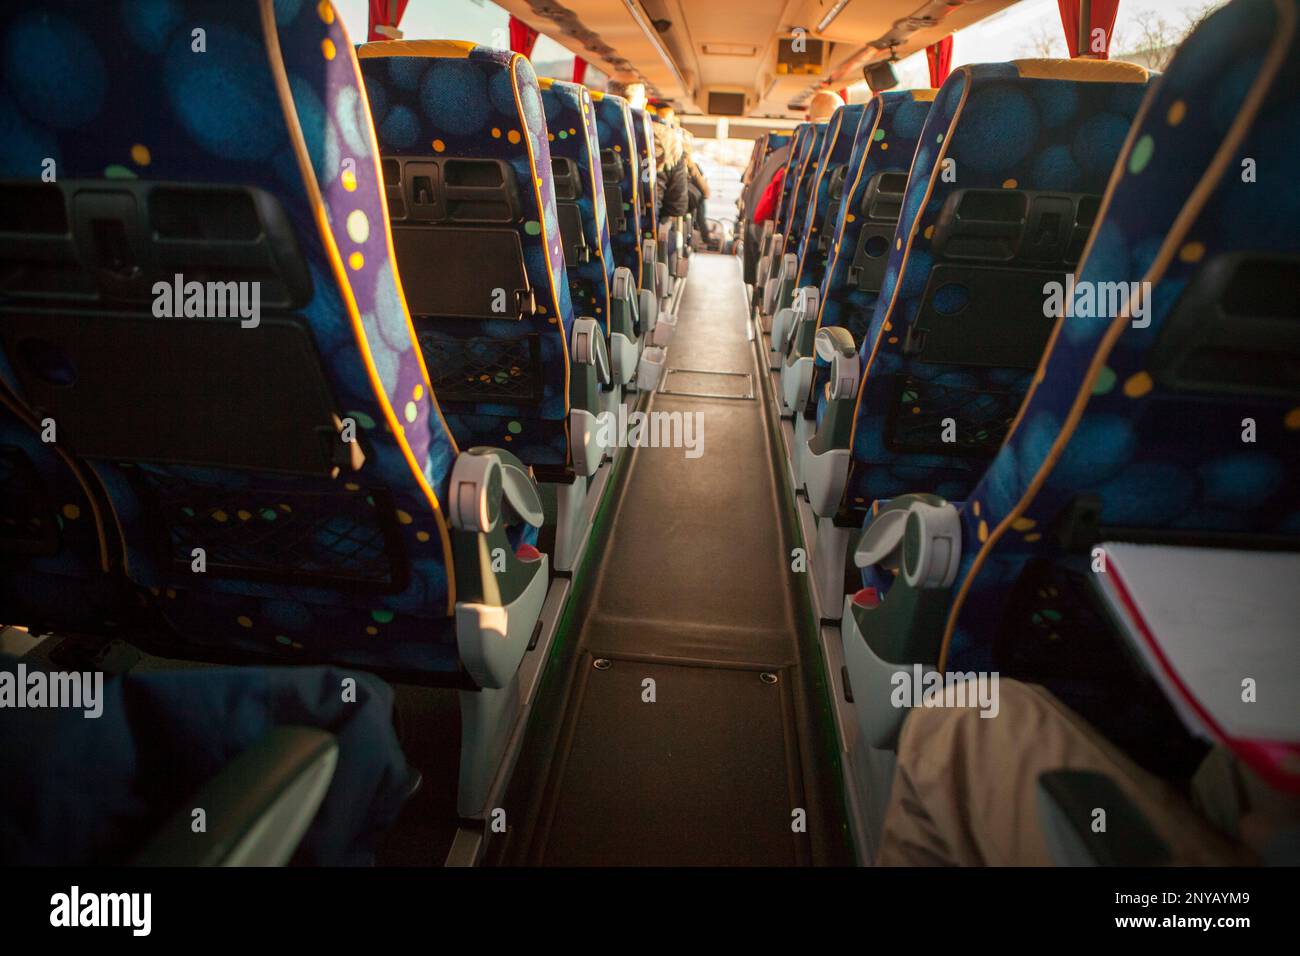 Autobus turistico interno. Linee dei sedili viste dal retro. Foto Stock